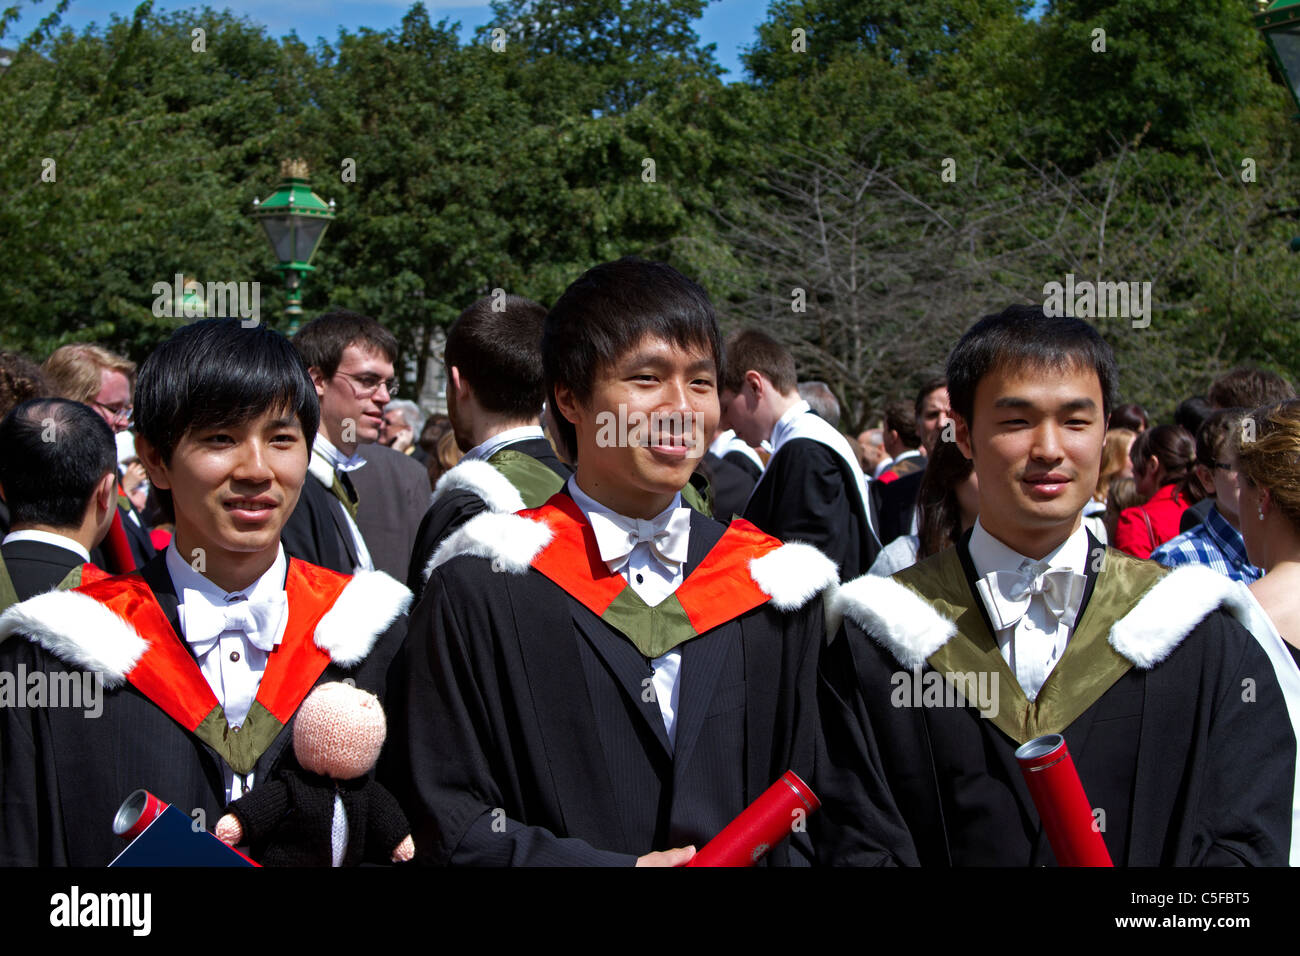 Edinburgh university graduation hi-res stock photography and images - Alamy